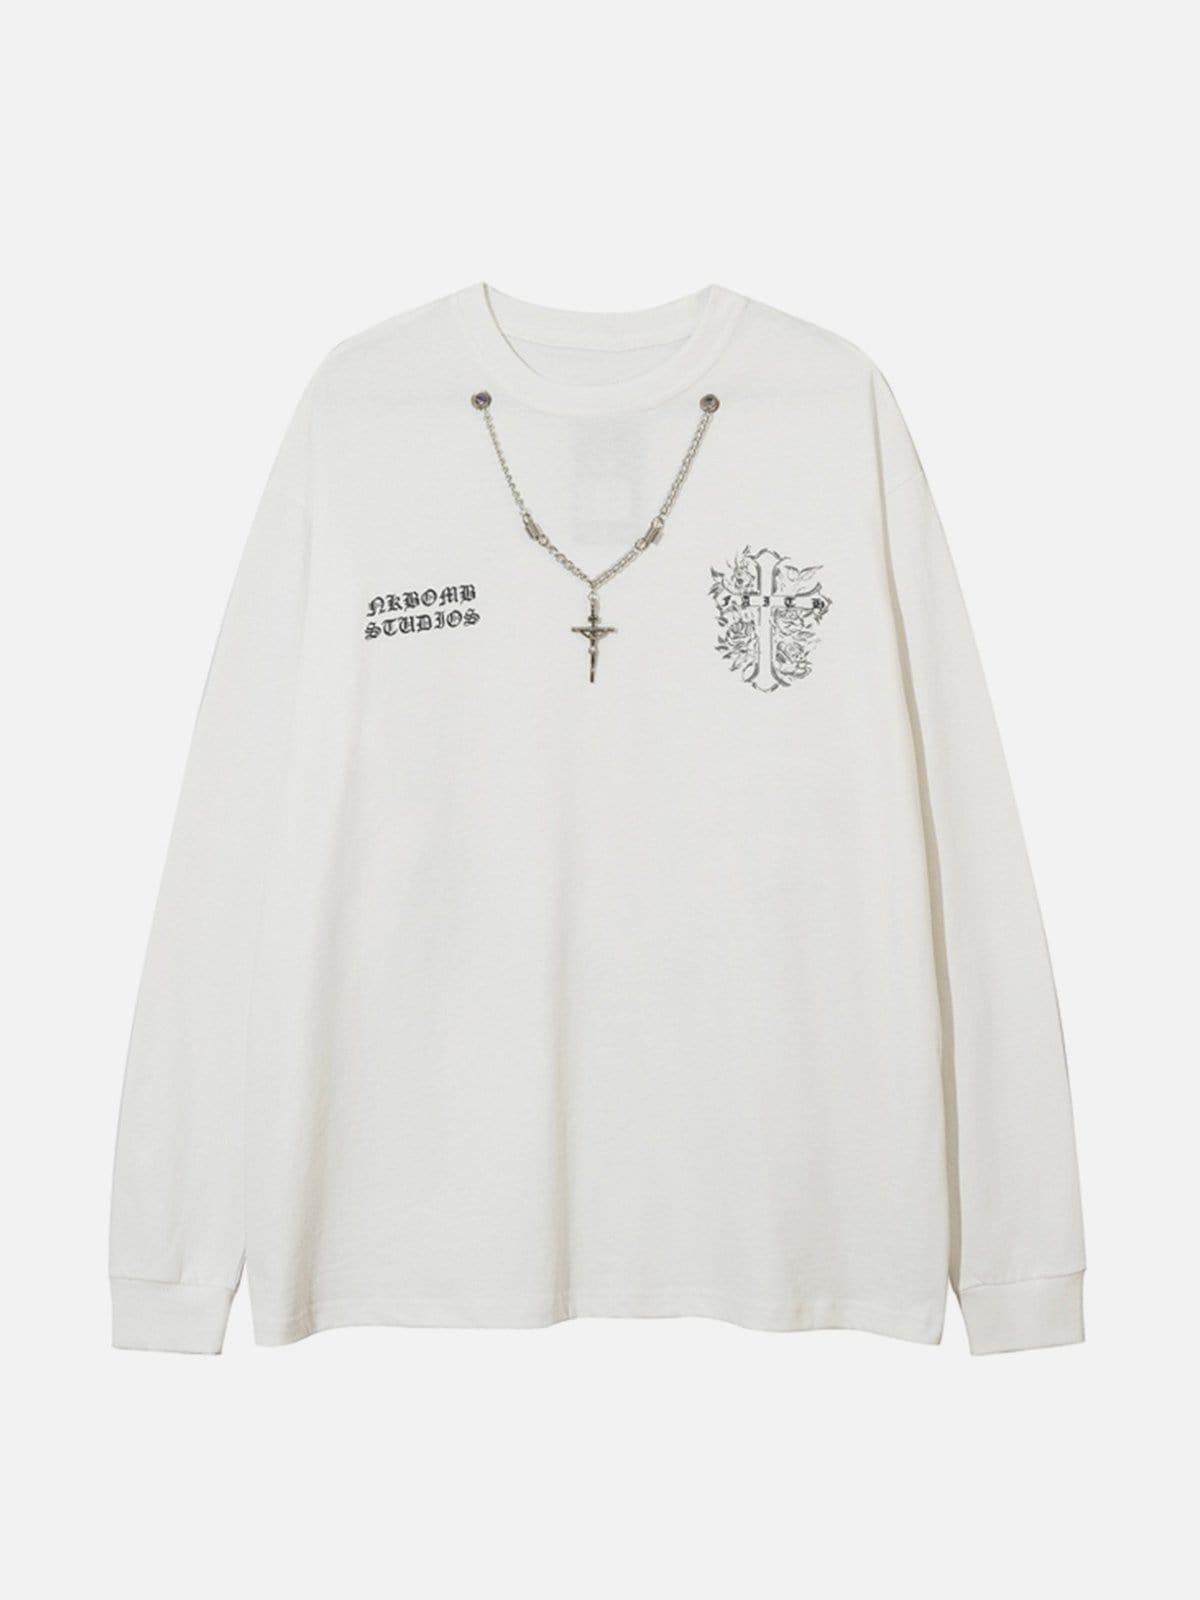 NEV Chain Cross-Print Sweatshirt